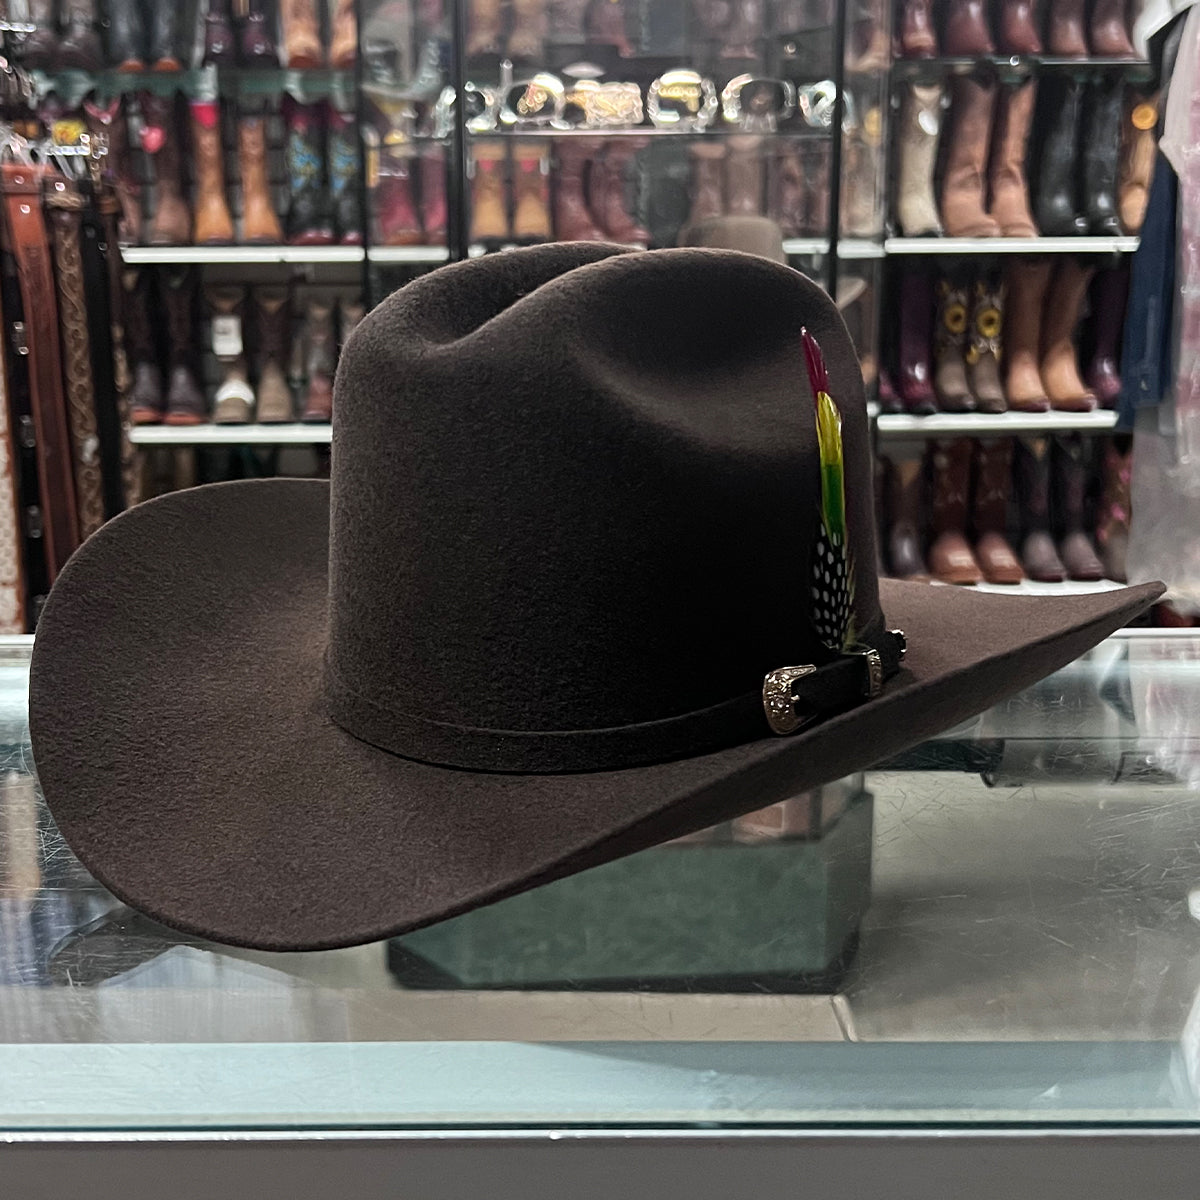 Brown cowboy felt hat
